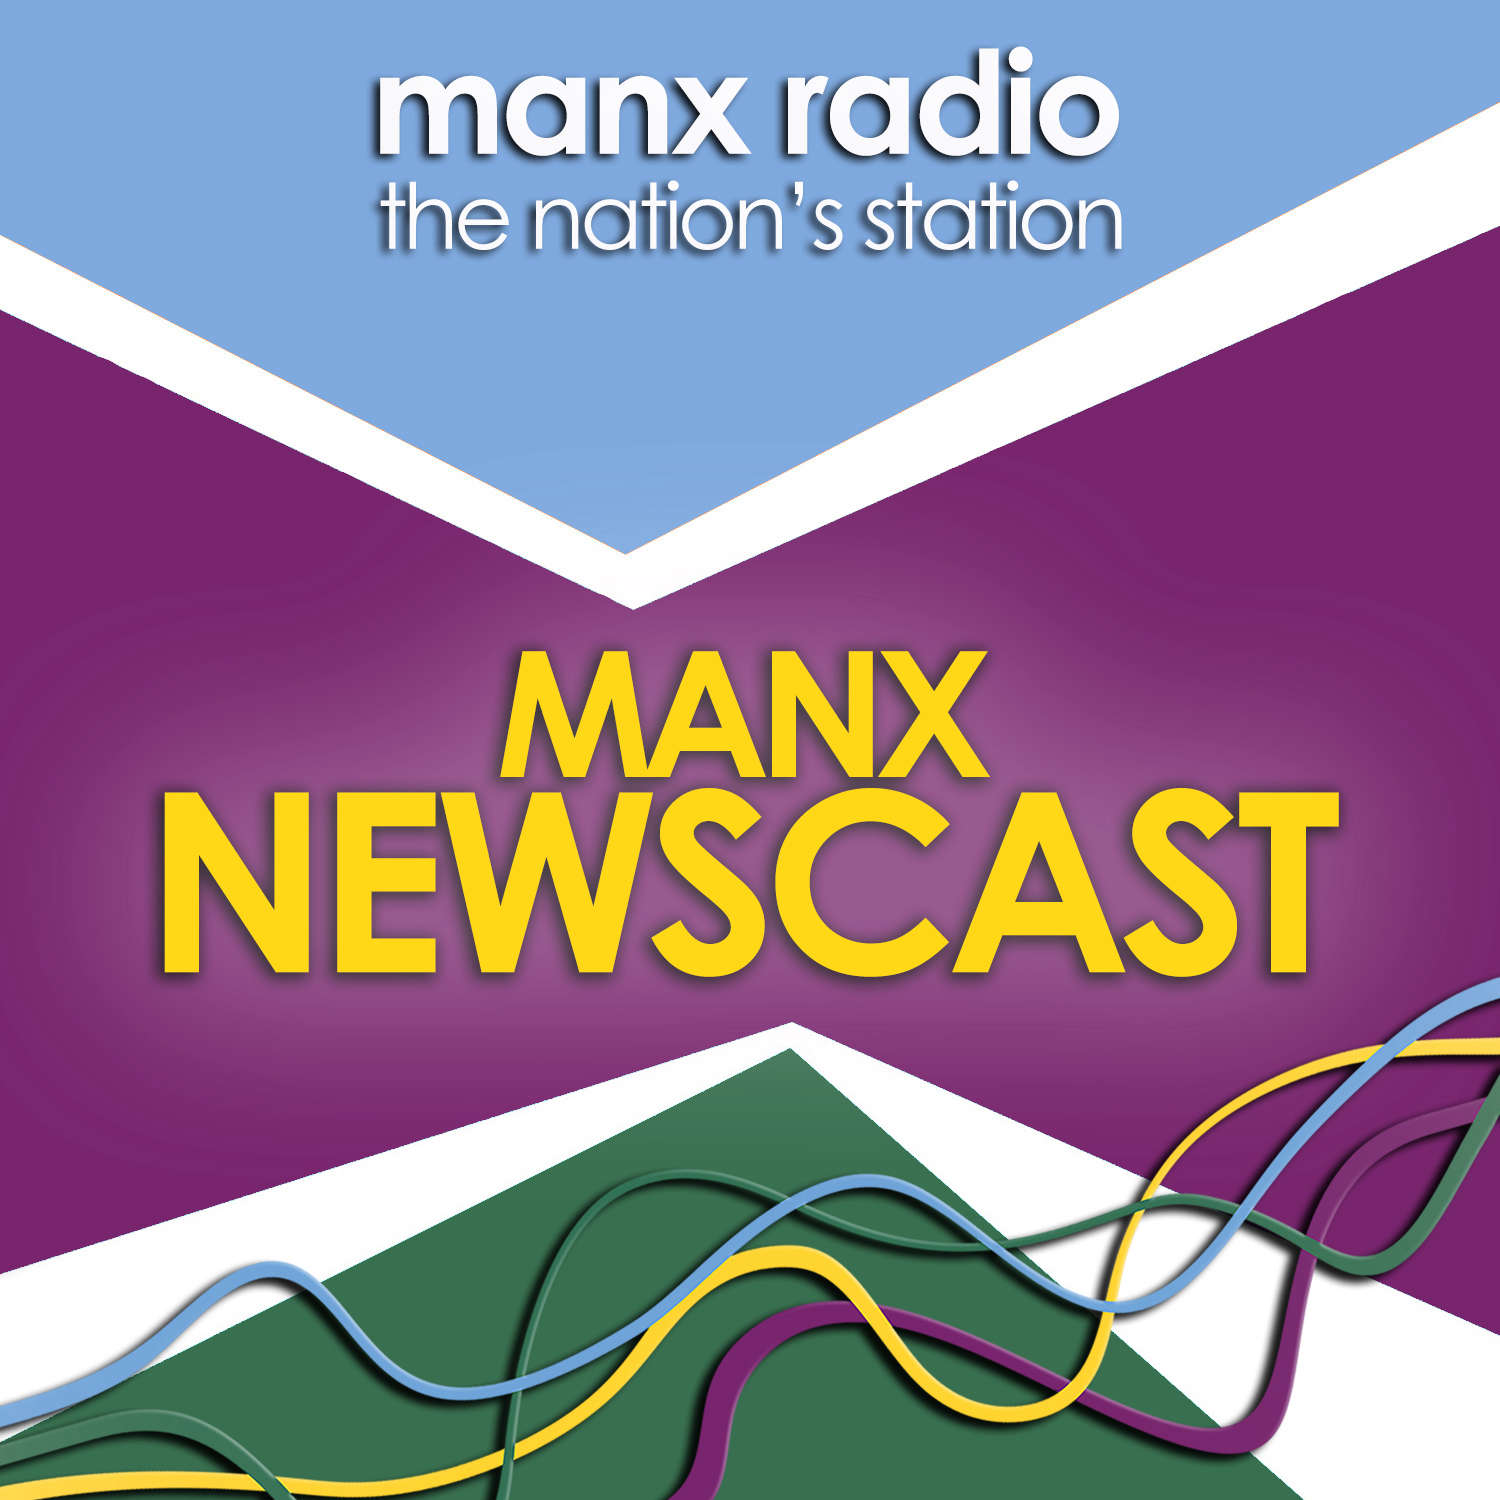 Manx Newscast